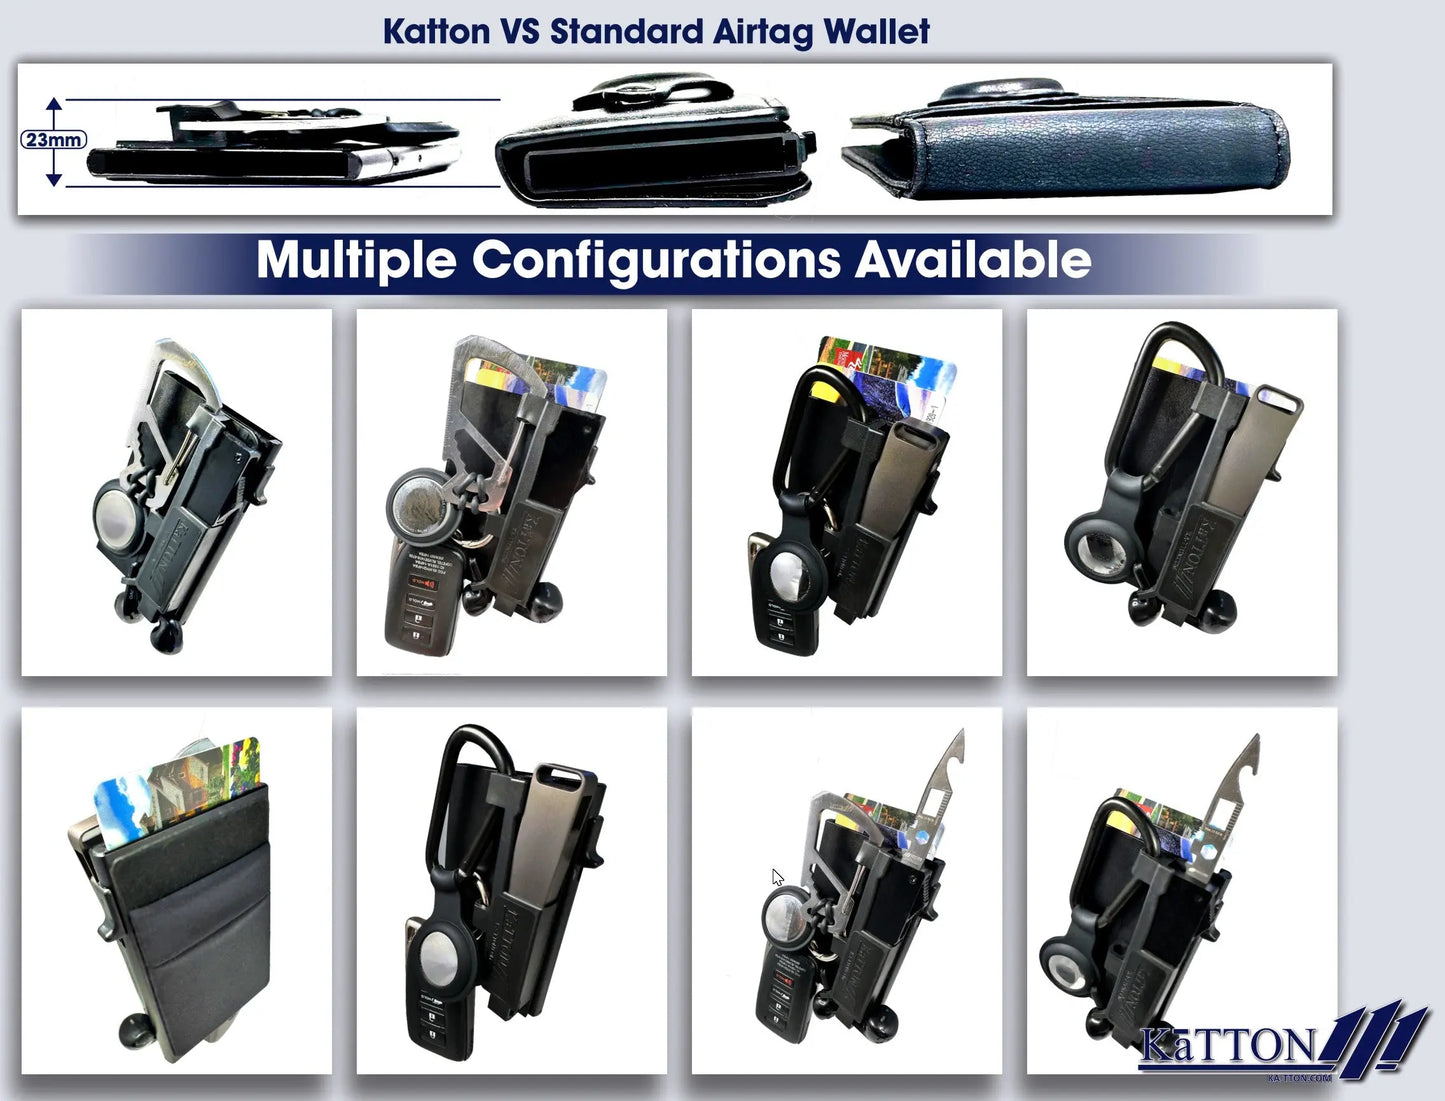 Multi-tool Slim Wallet With removable multi-tool, air tag / smart tag holder & air pod holders Ka-TTON